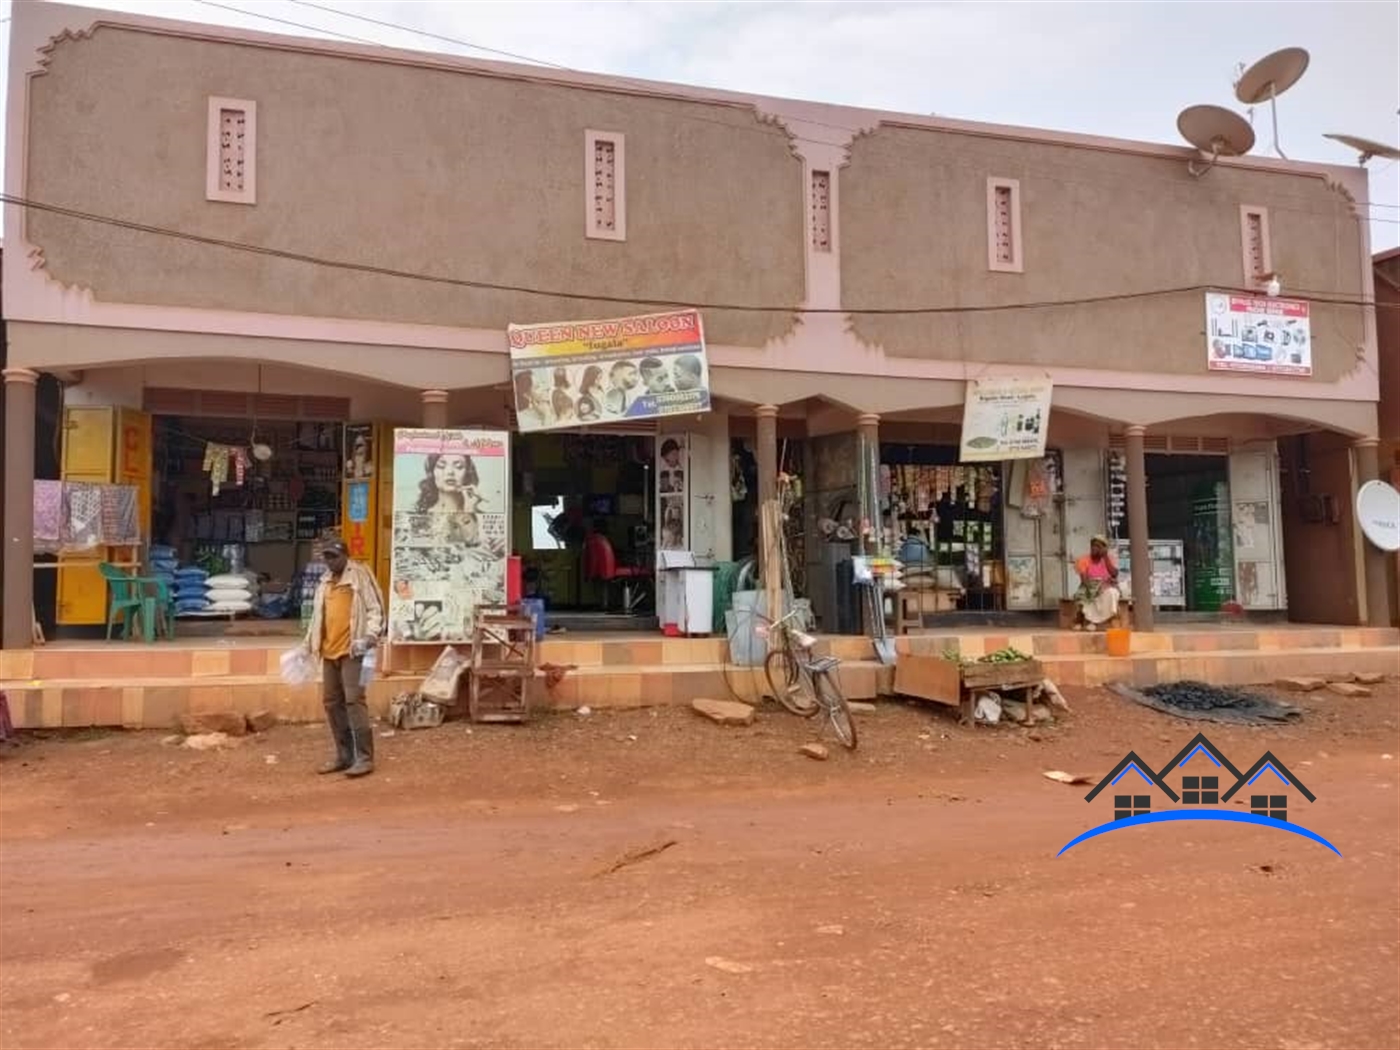 Shop for sale in Lugala Wakiso